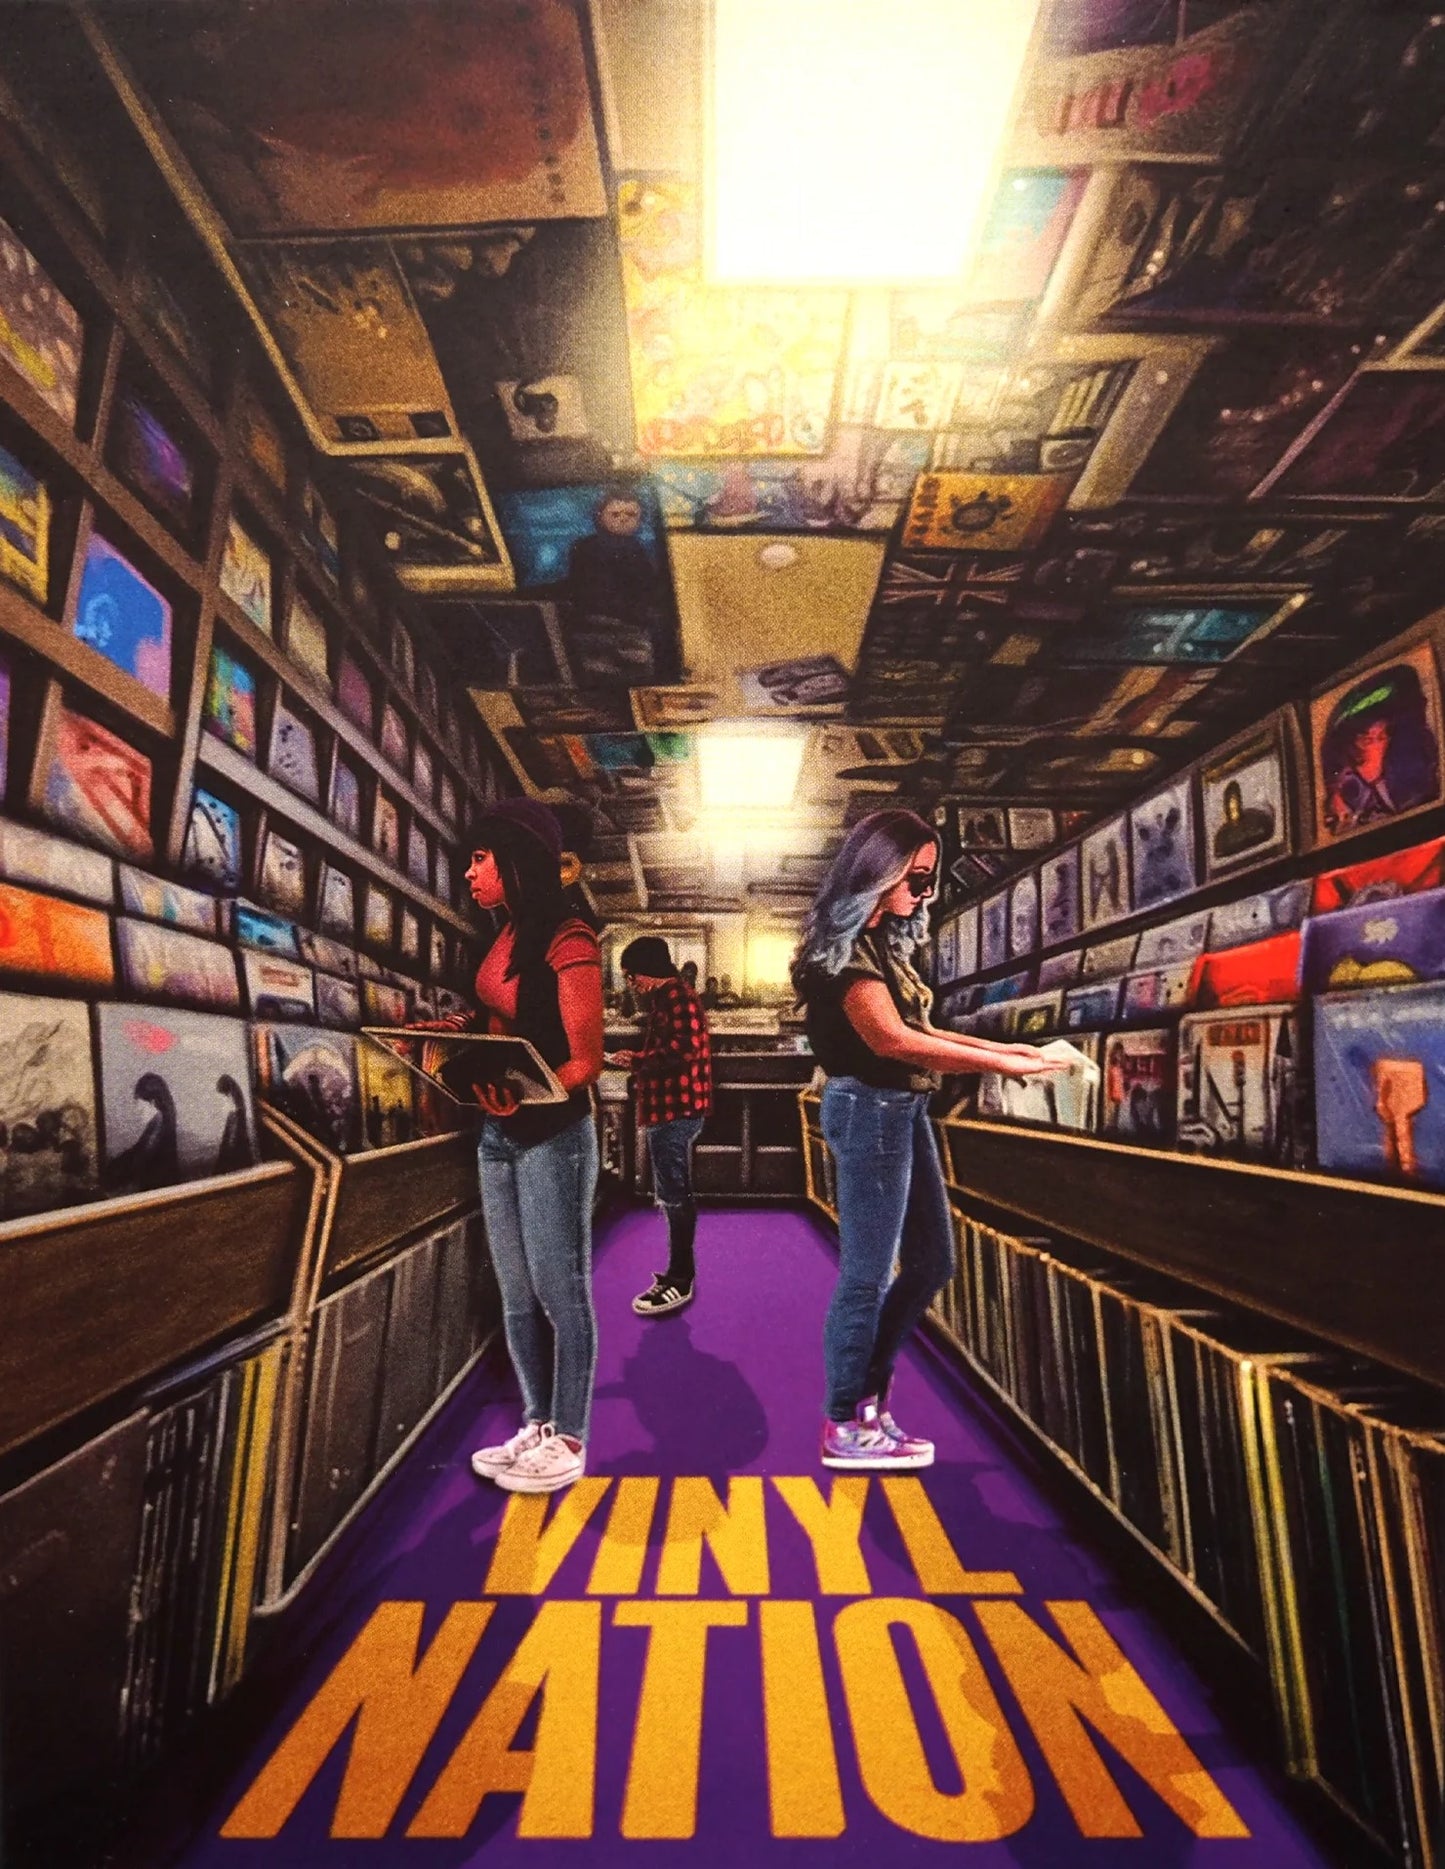 Vinyl Nation Limited Edition ETR Media Blu-Ray [NEW] [SLIPCOVER]